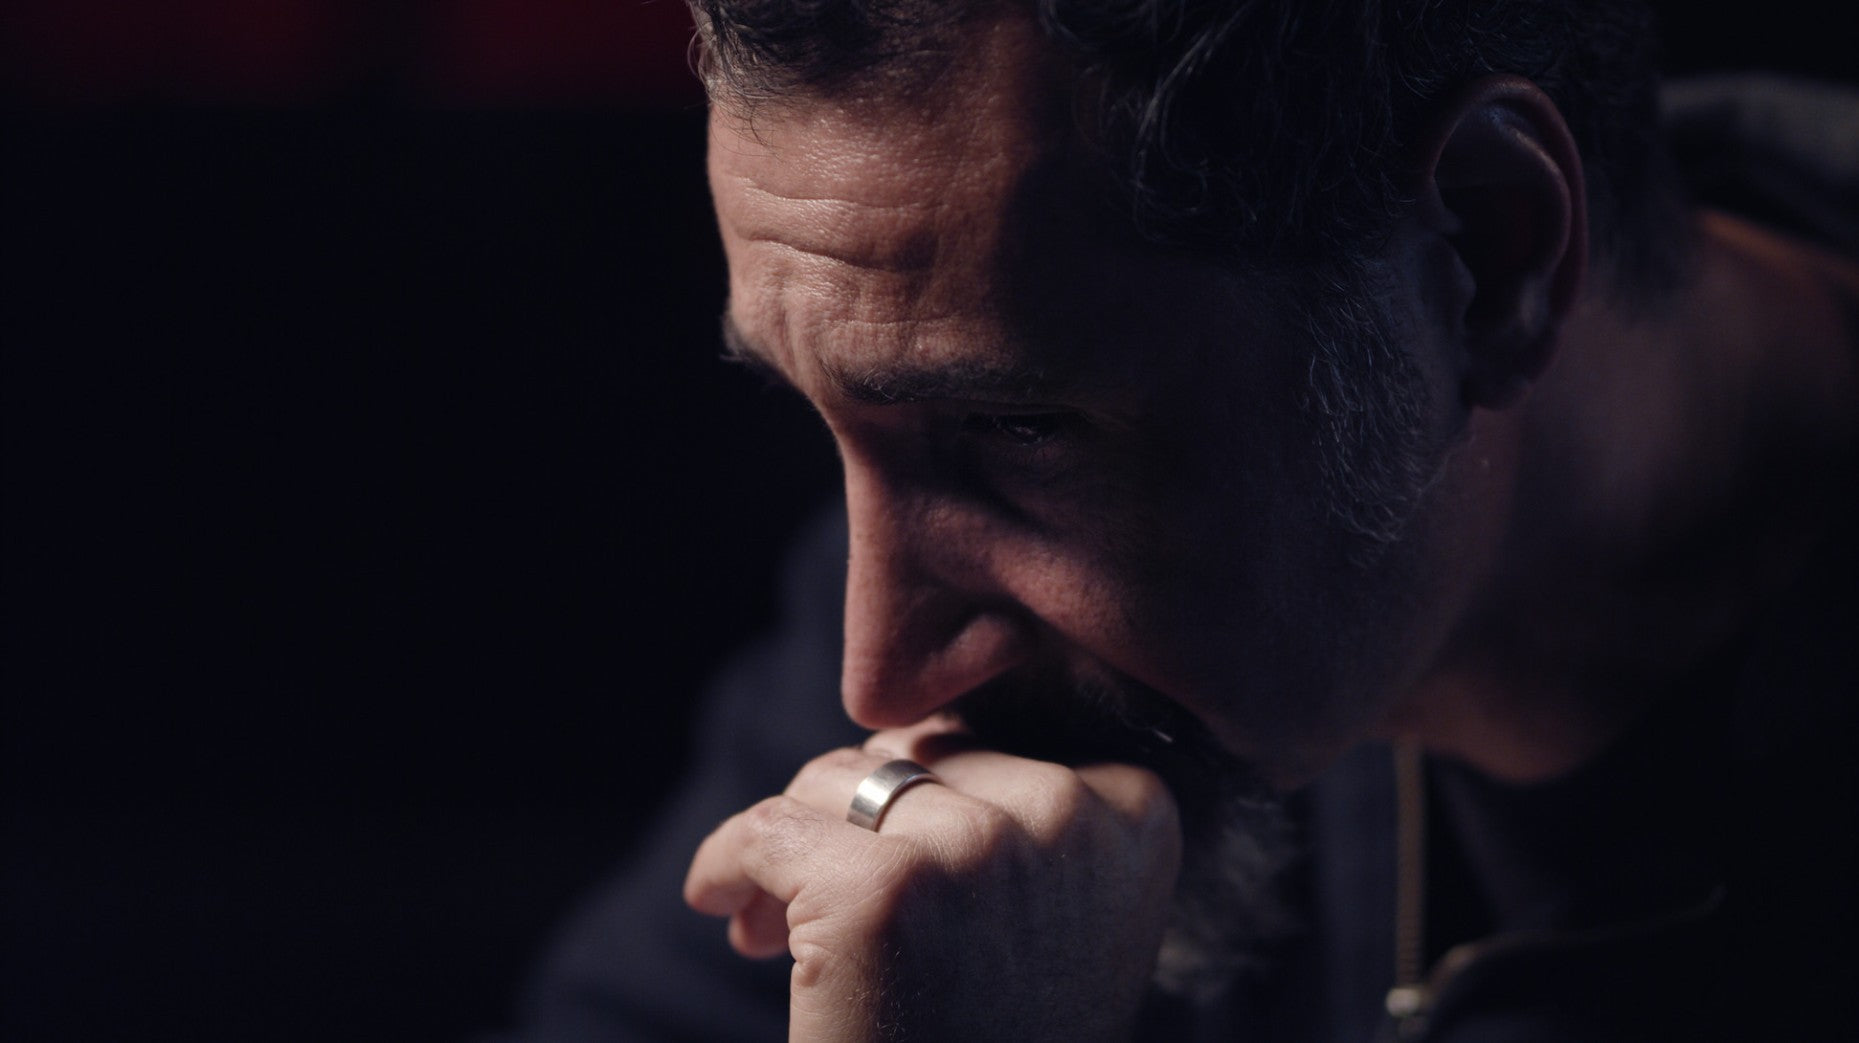 System of a Down frontman Serj Tankian drops new music, talks documentary ‘Truth to Power’